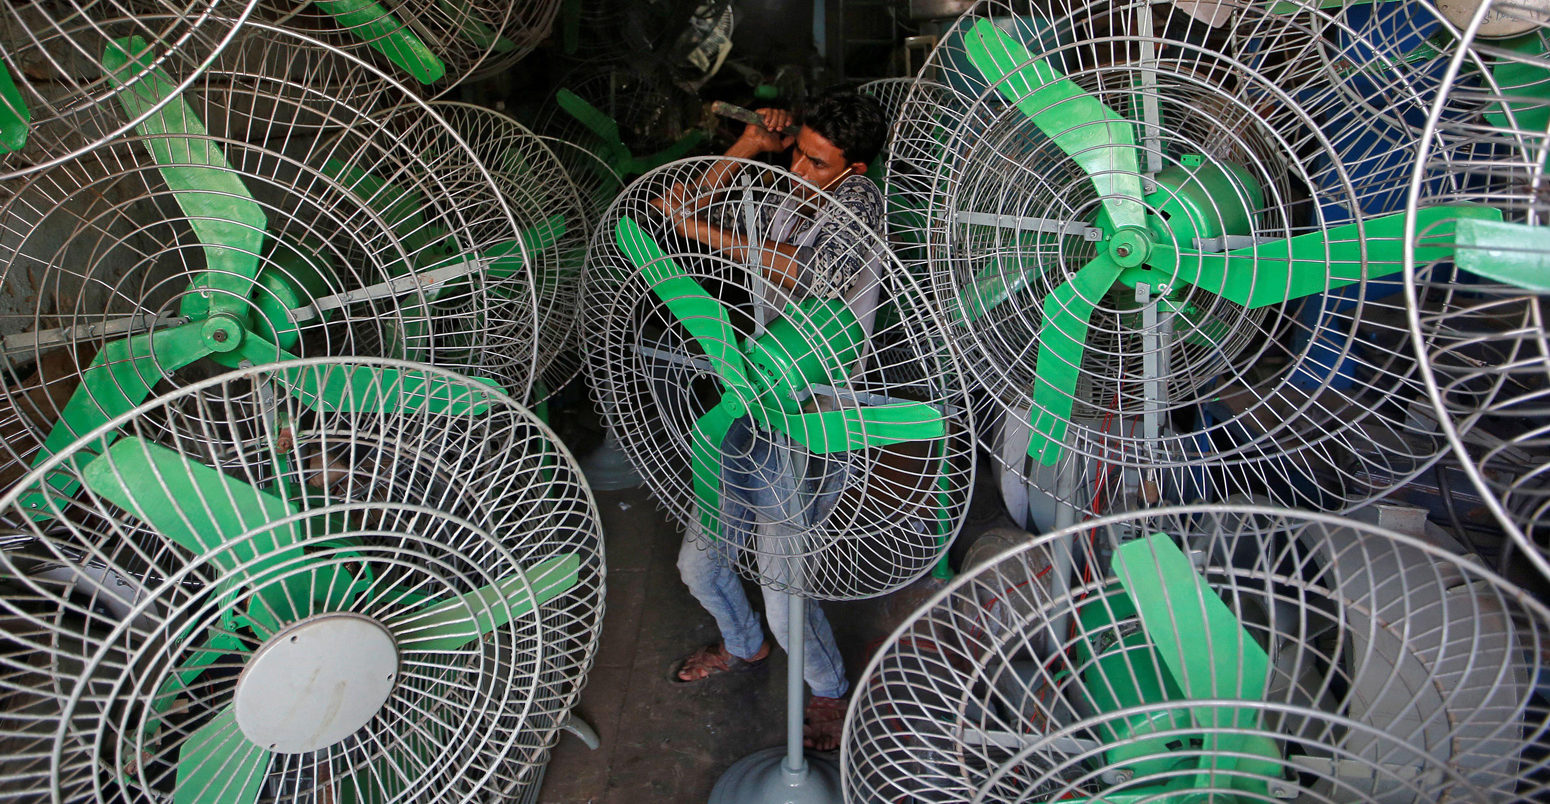 A mechanic uses a hammer to fix steel guard of an electric fan inside a shop in Mumbai